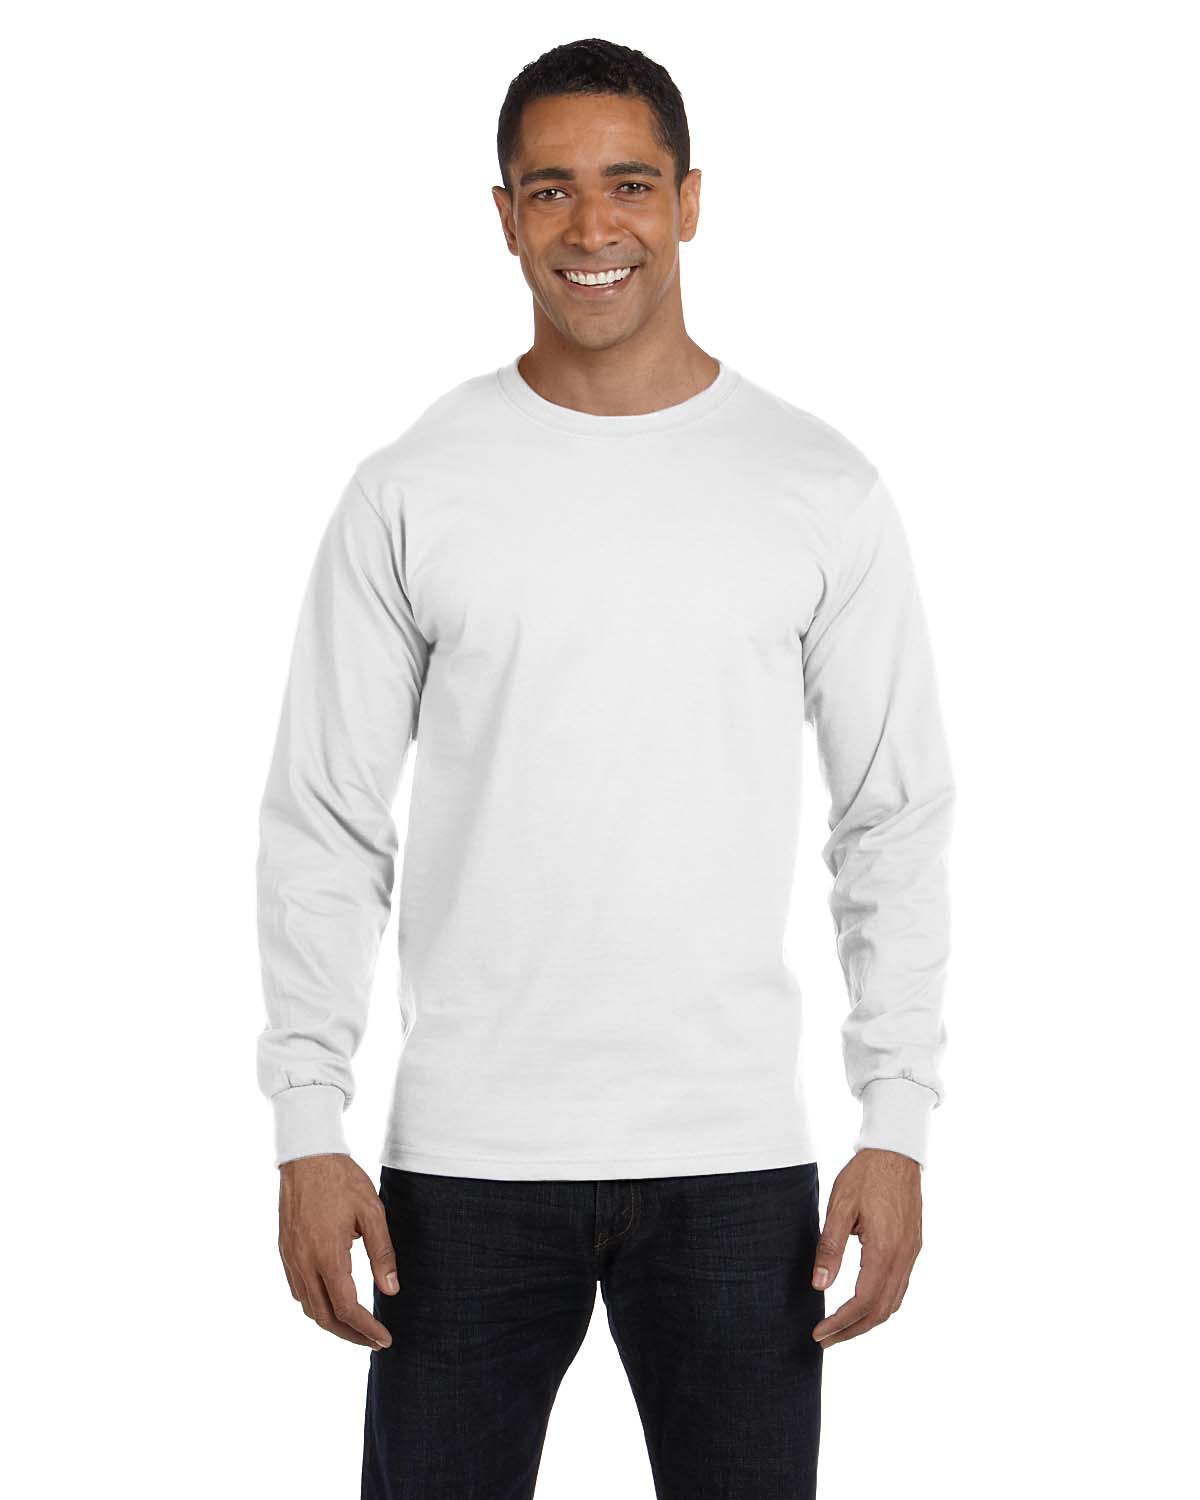 Hanes 5286 - ComfortSoft Heavyweight Long Sleeve T-Shirt